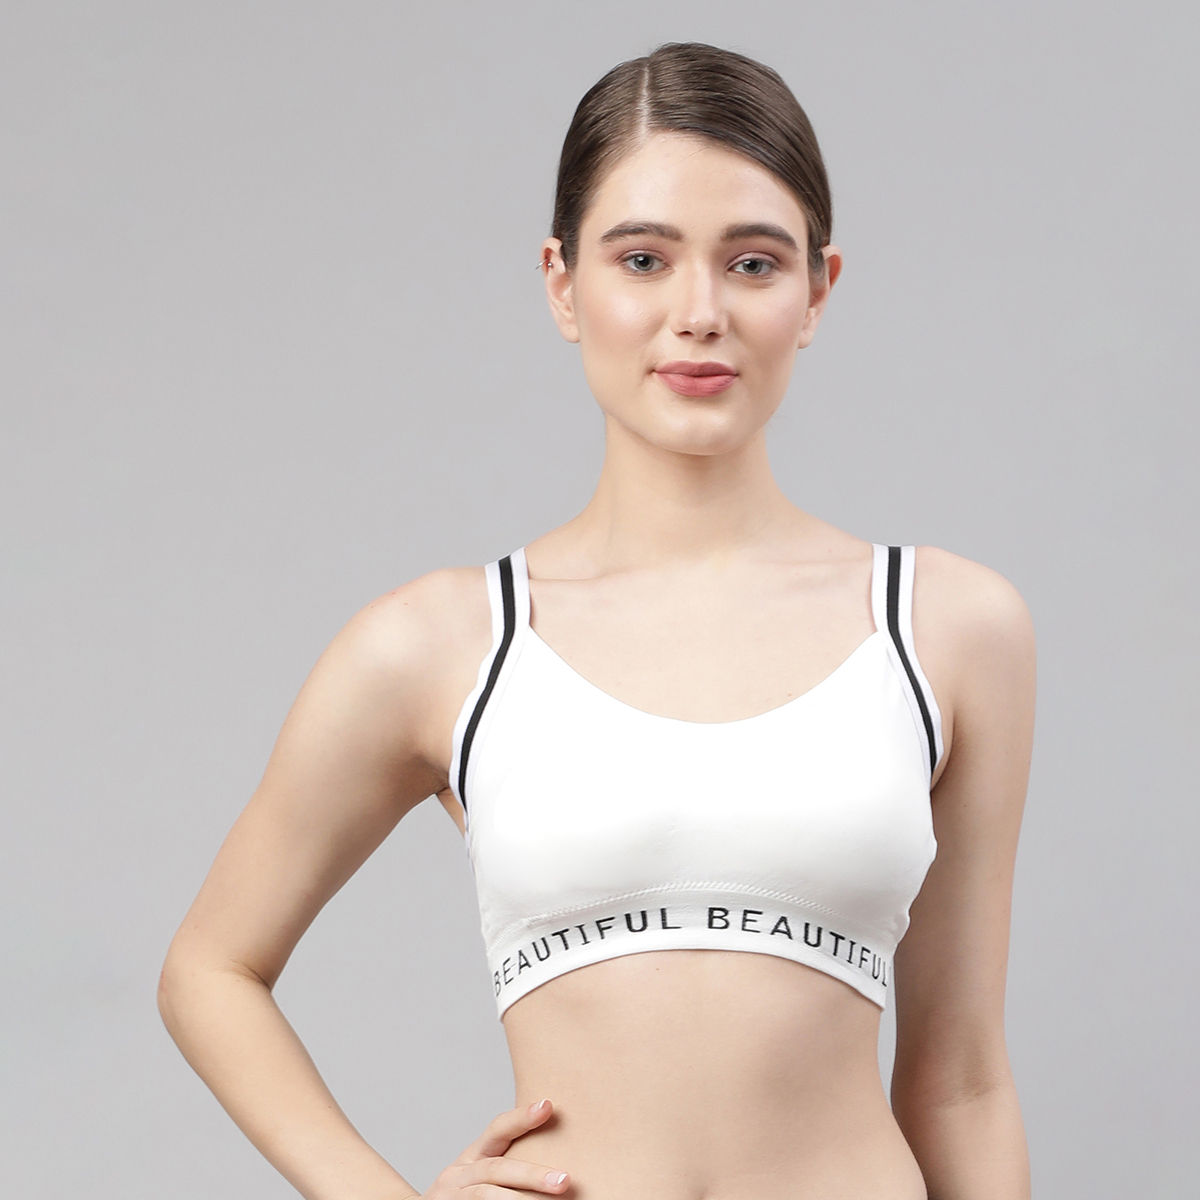 Buy PrettyCat High Performance Sports Gym Running Bra Panty Set White online